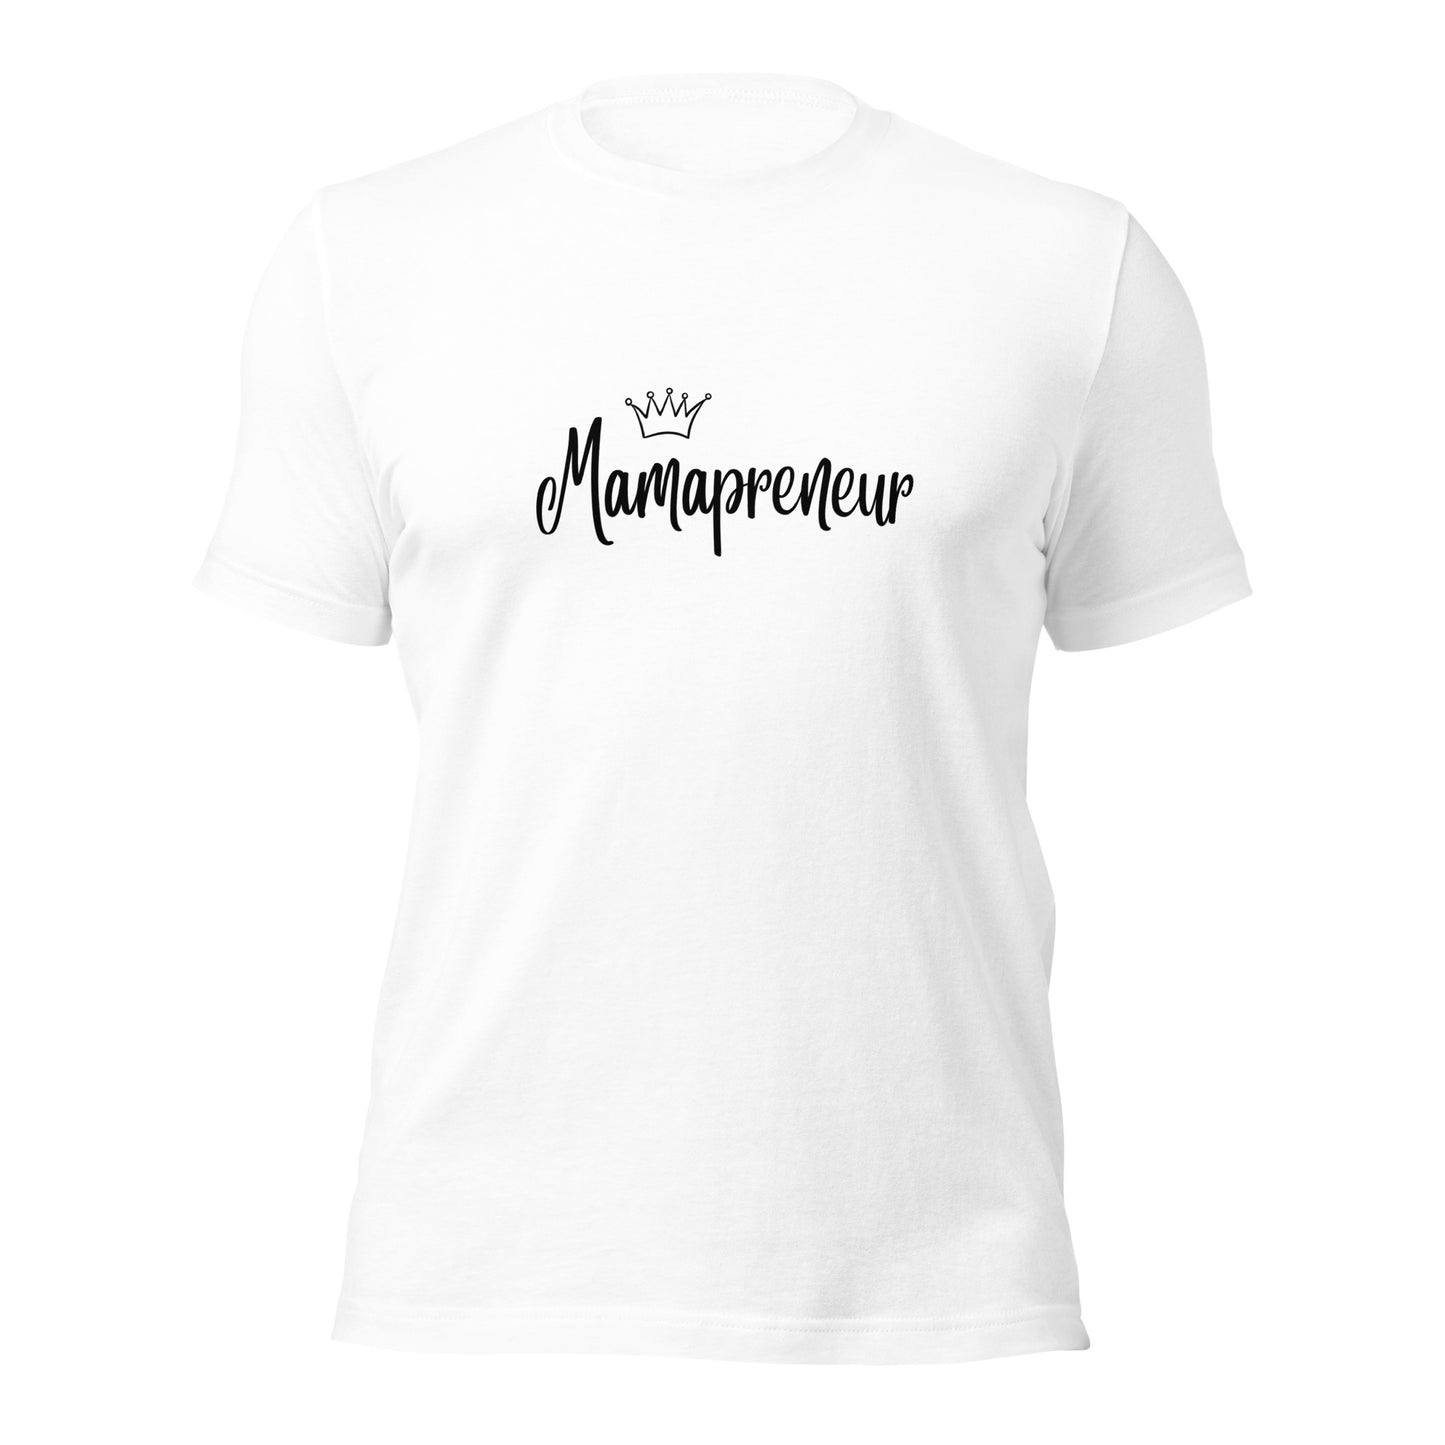 Mamapreneur - Soft Organic Cotton Tshirt for Women